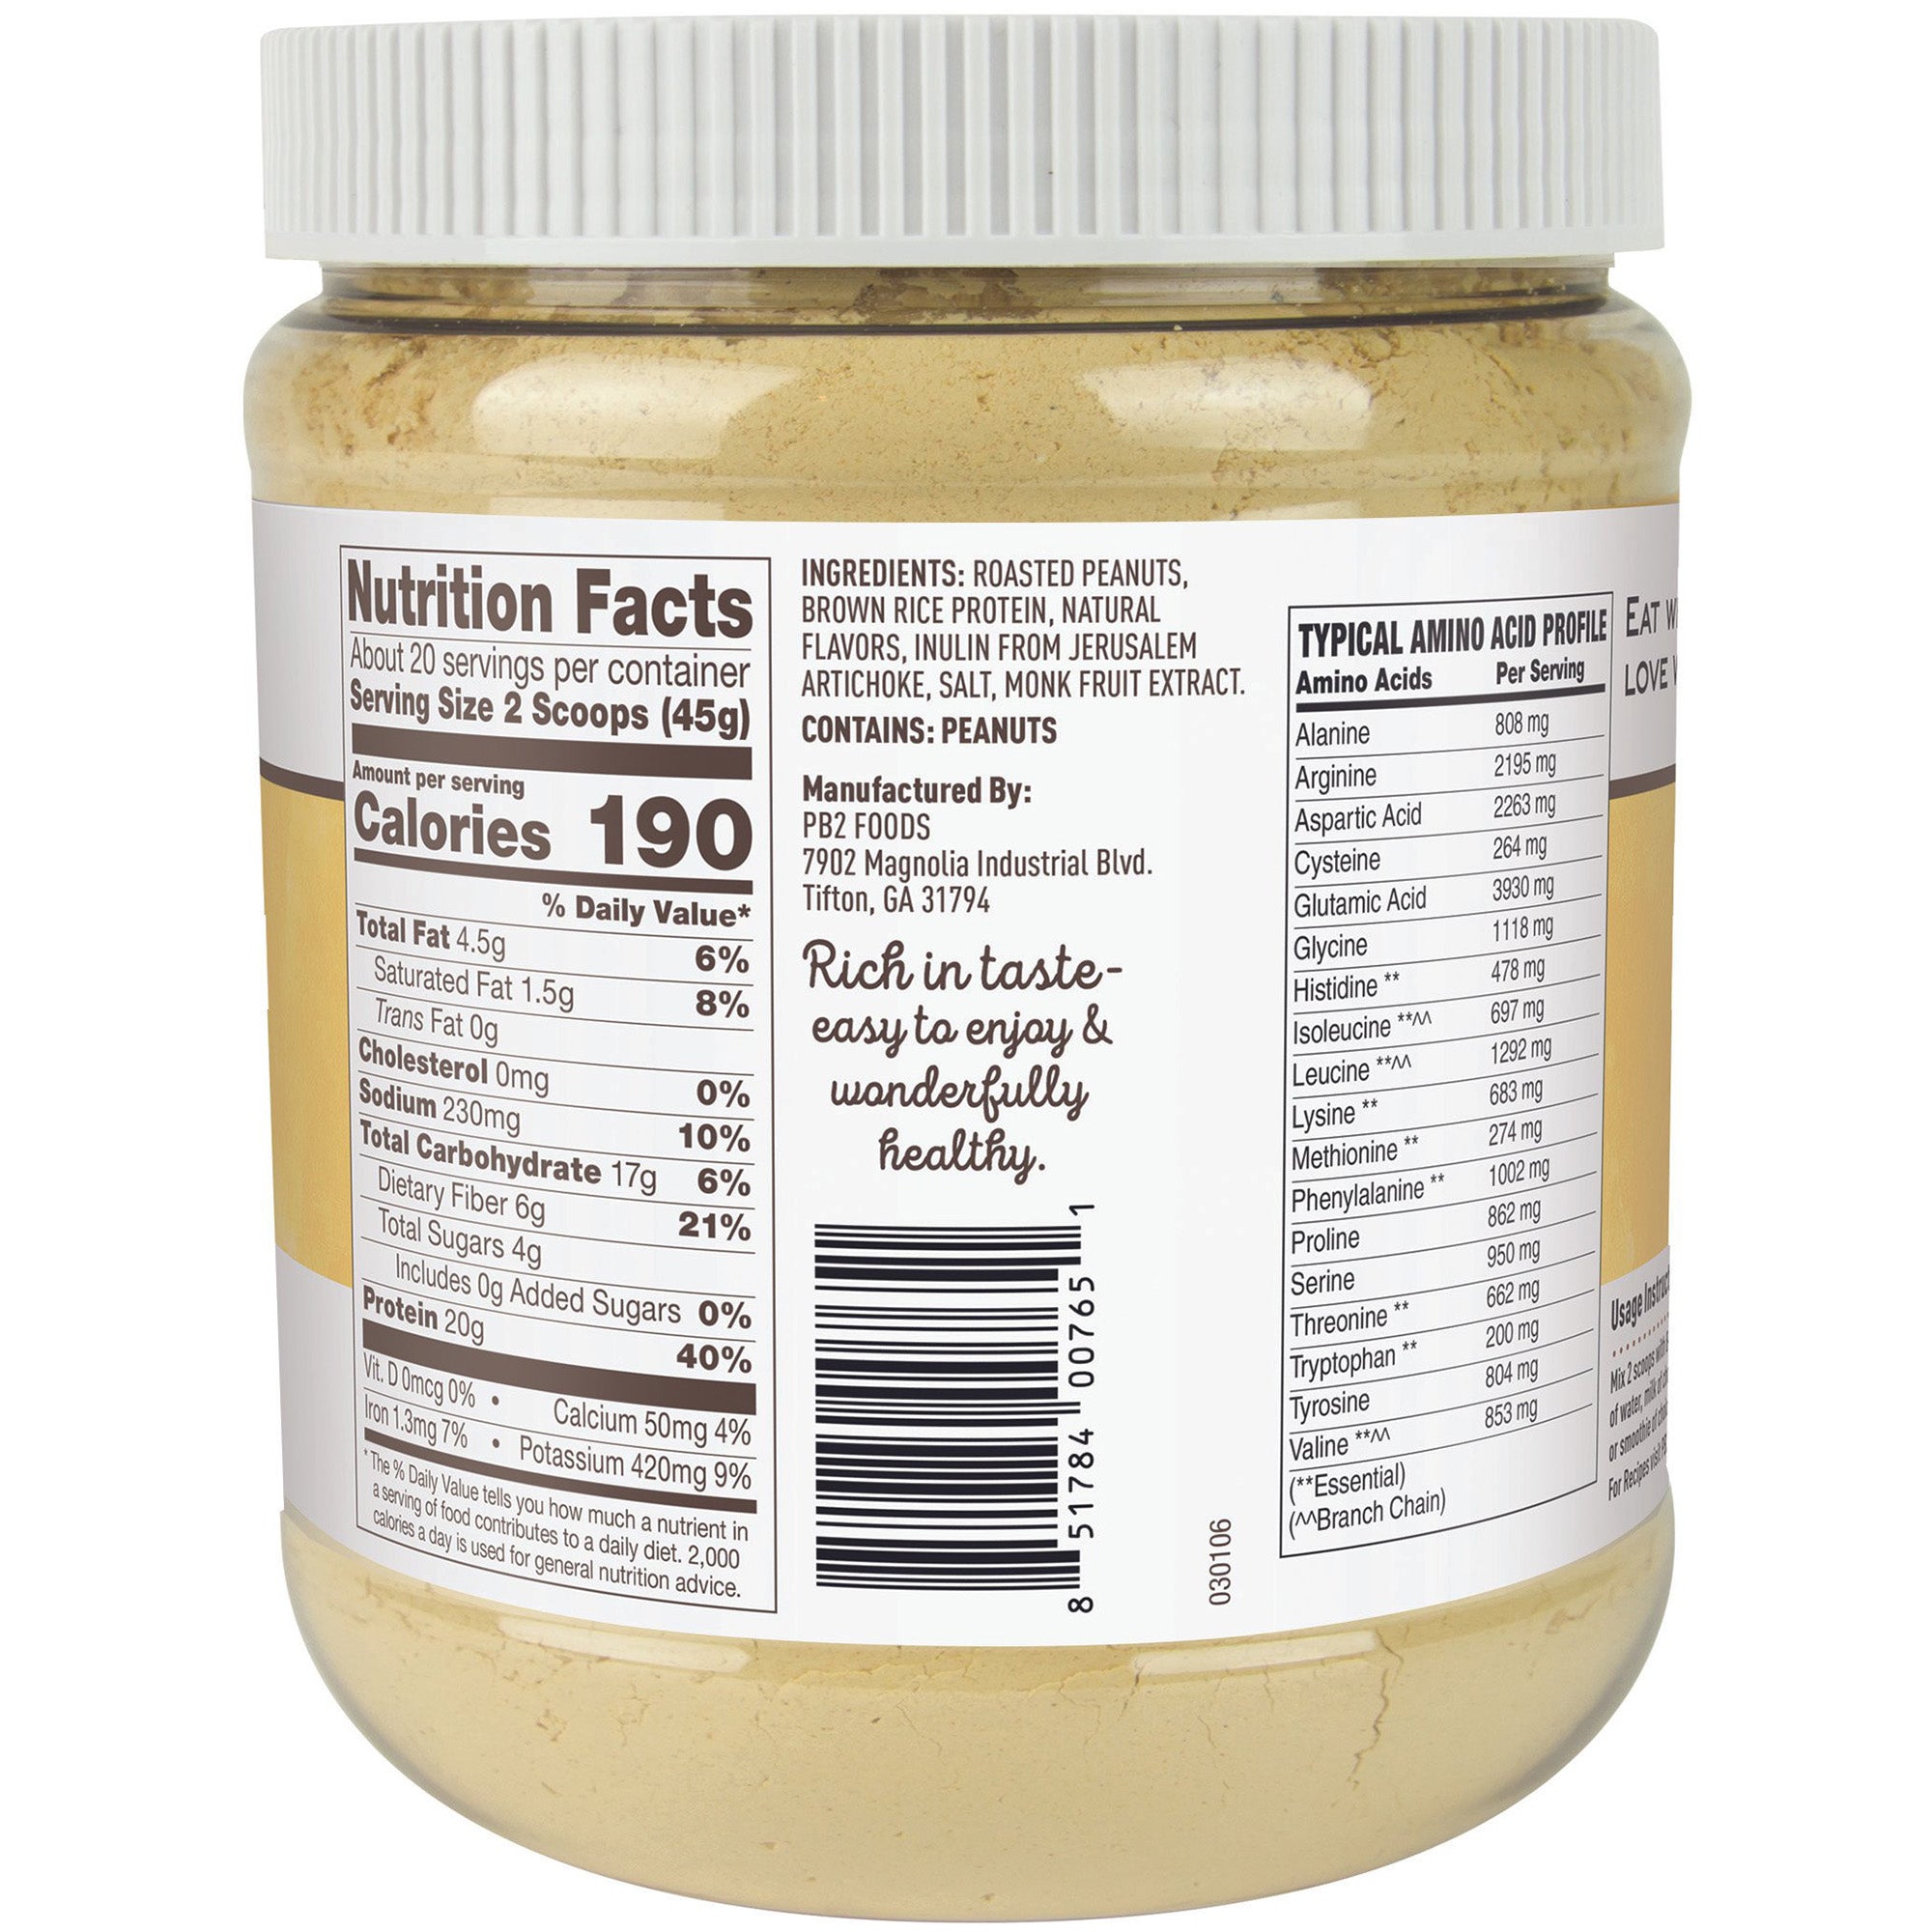 PB2 Organic Powdered Peanut Butter – PB2 Foods Storefront